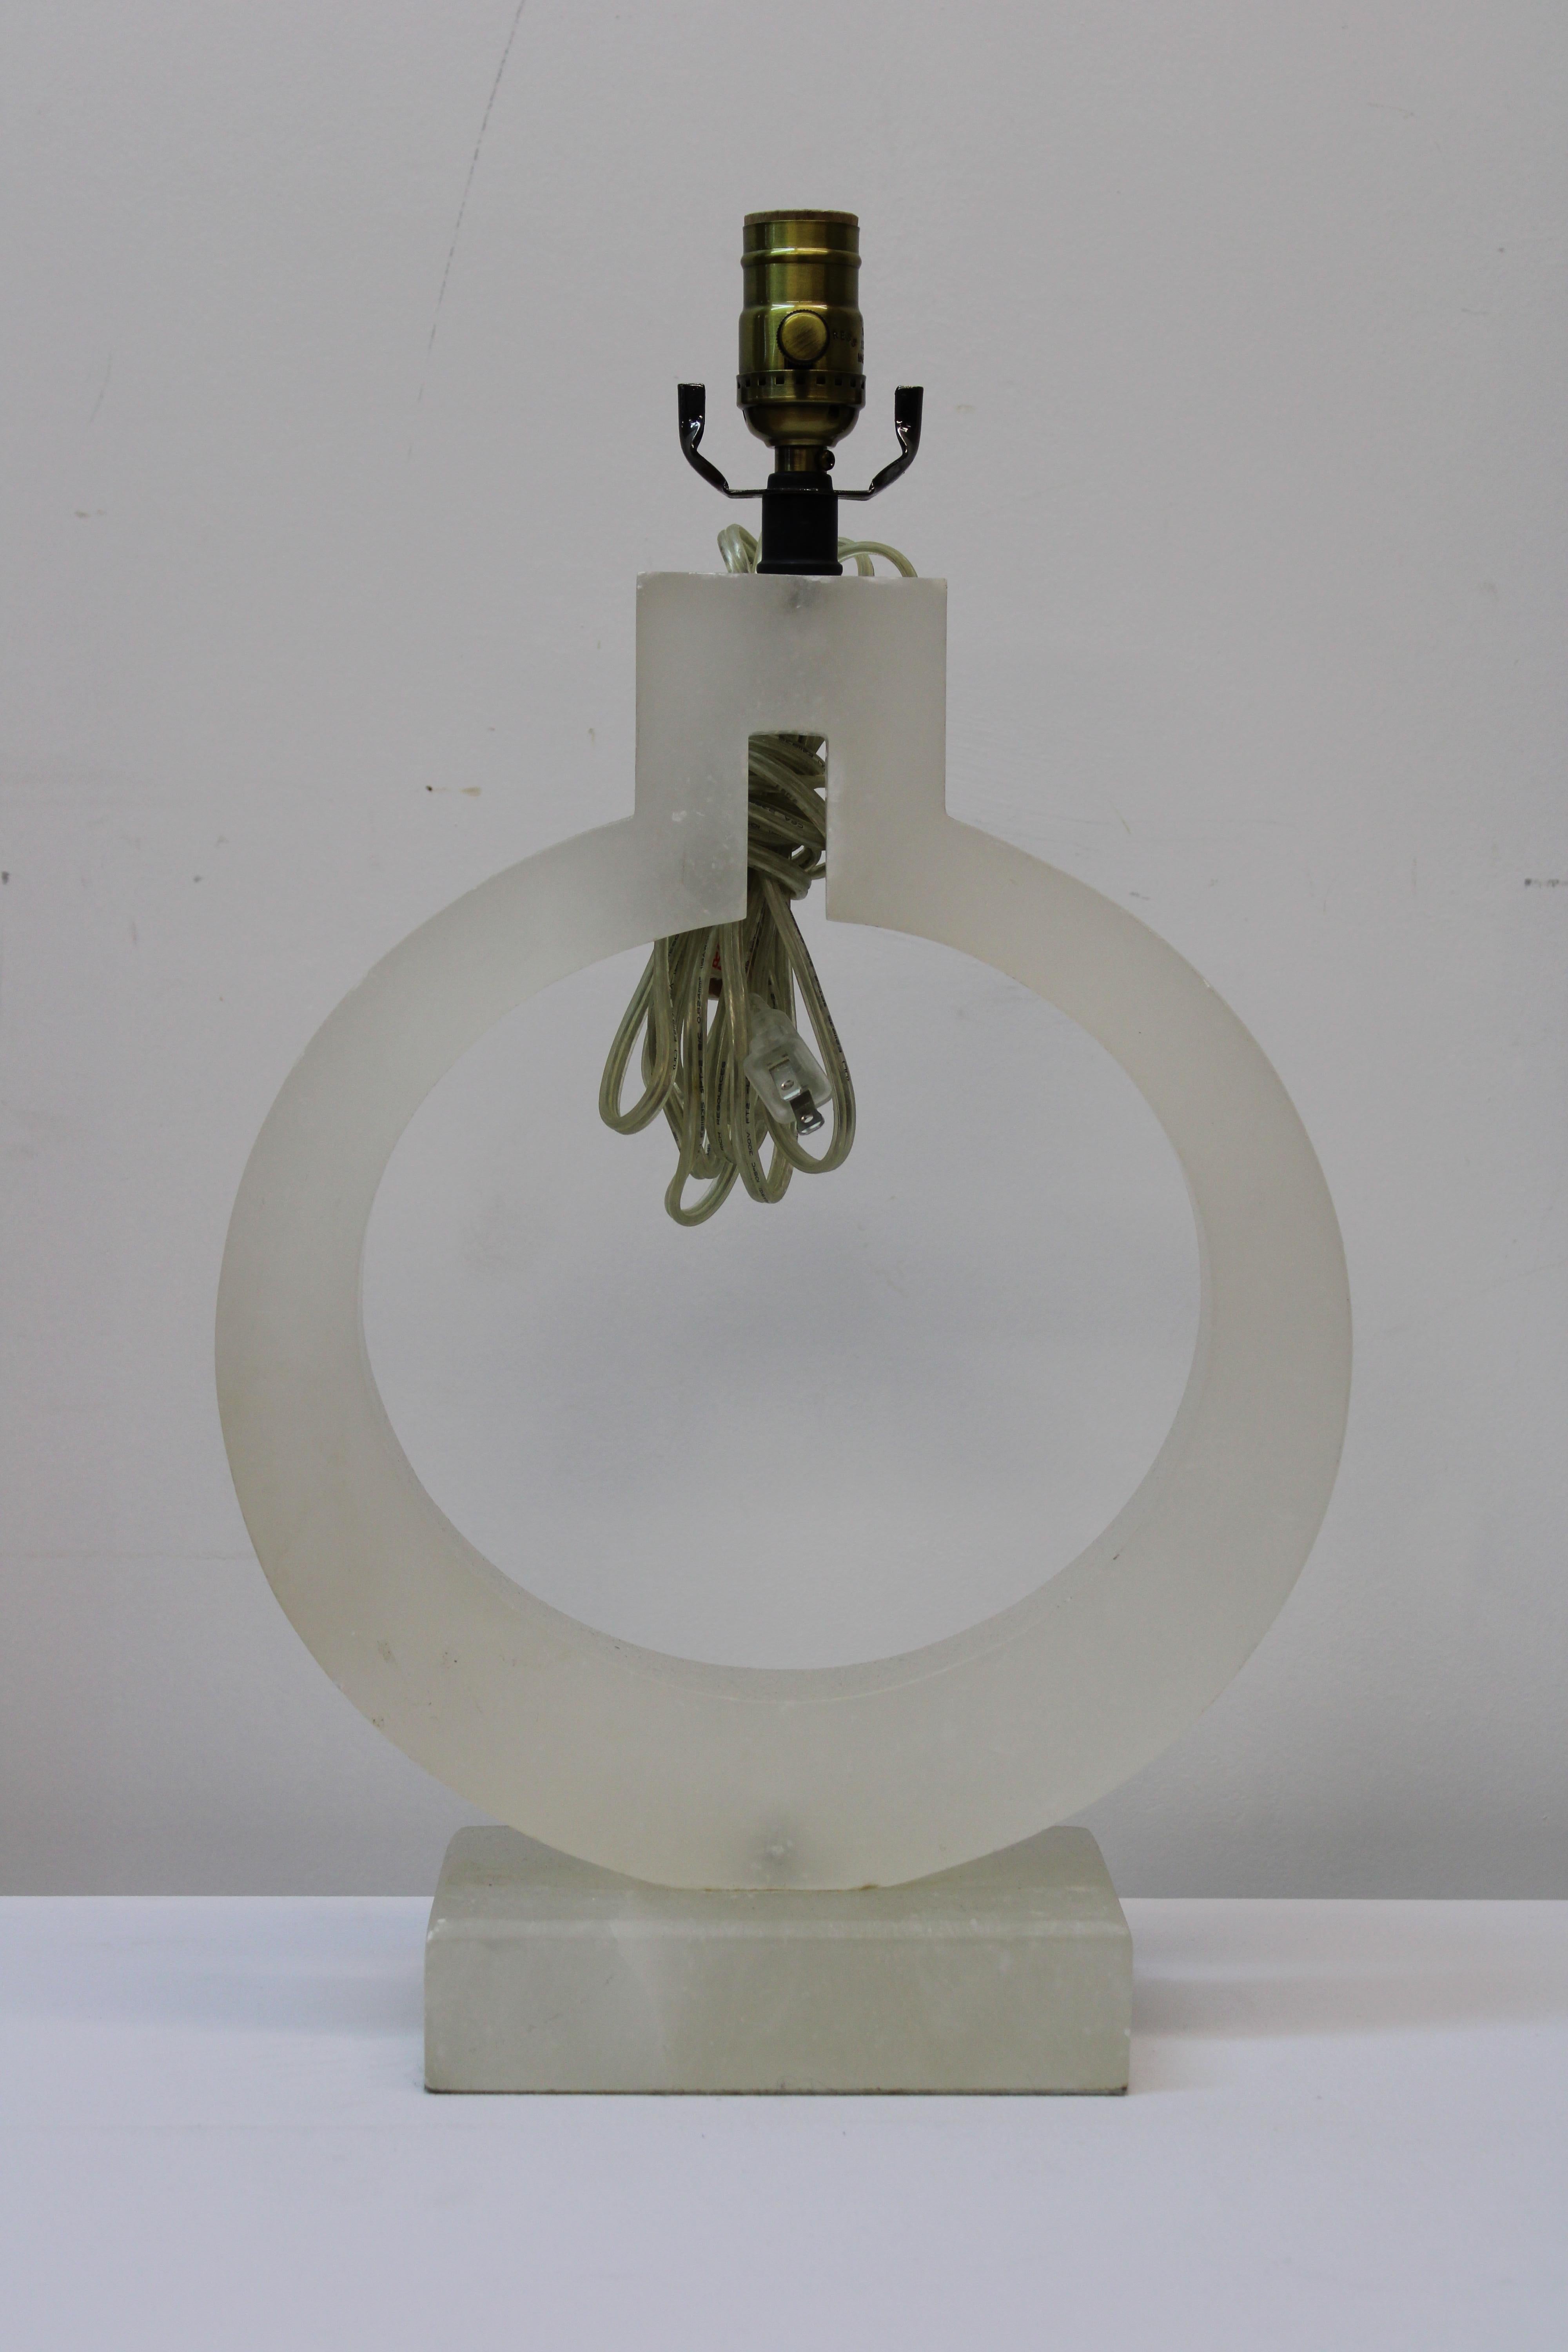 C. Mid 20th Century

Circular Alabaster table lamps.